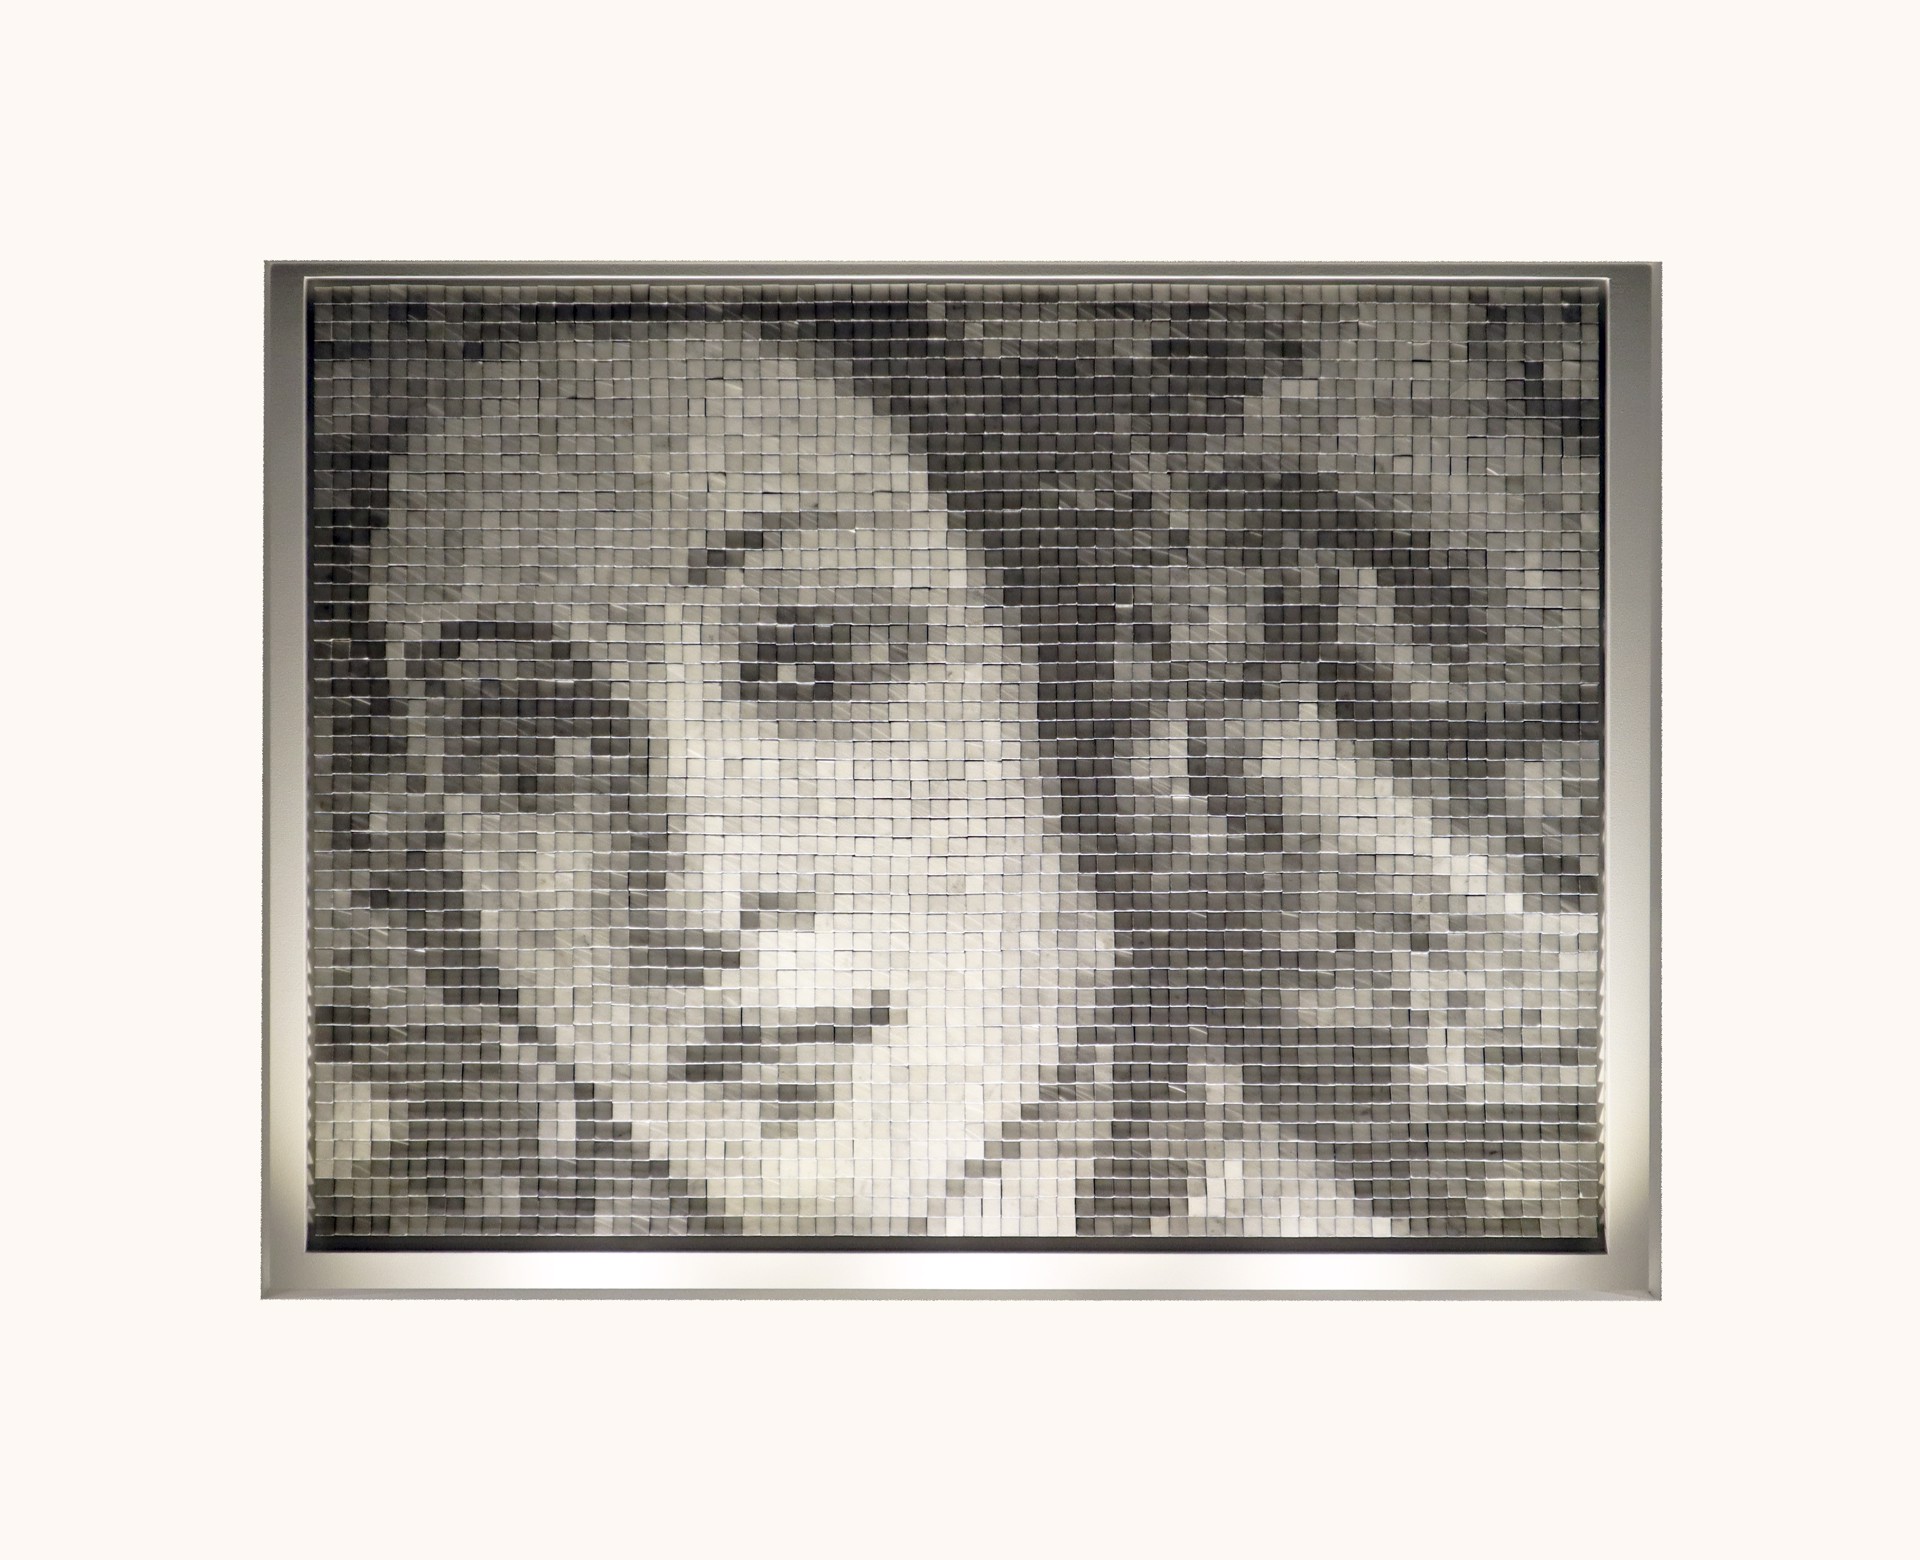 Venus (Homage to Botticelli) by J.P. Goncalves, Pixel